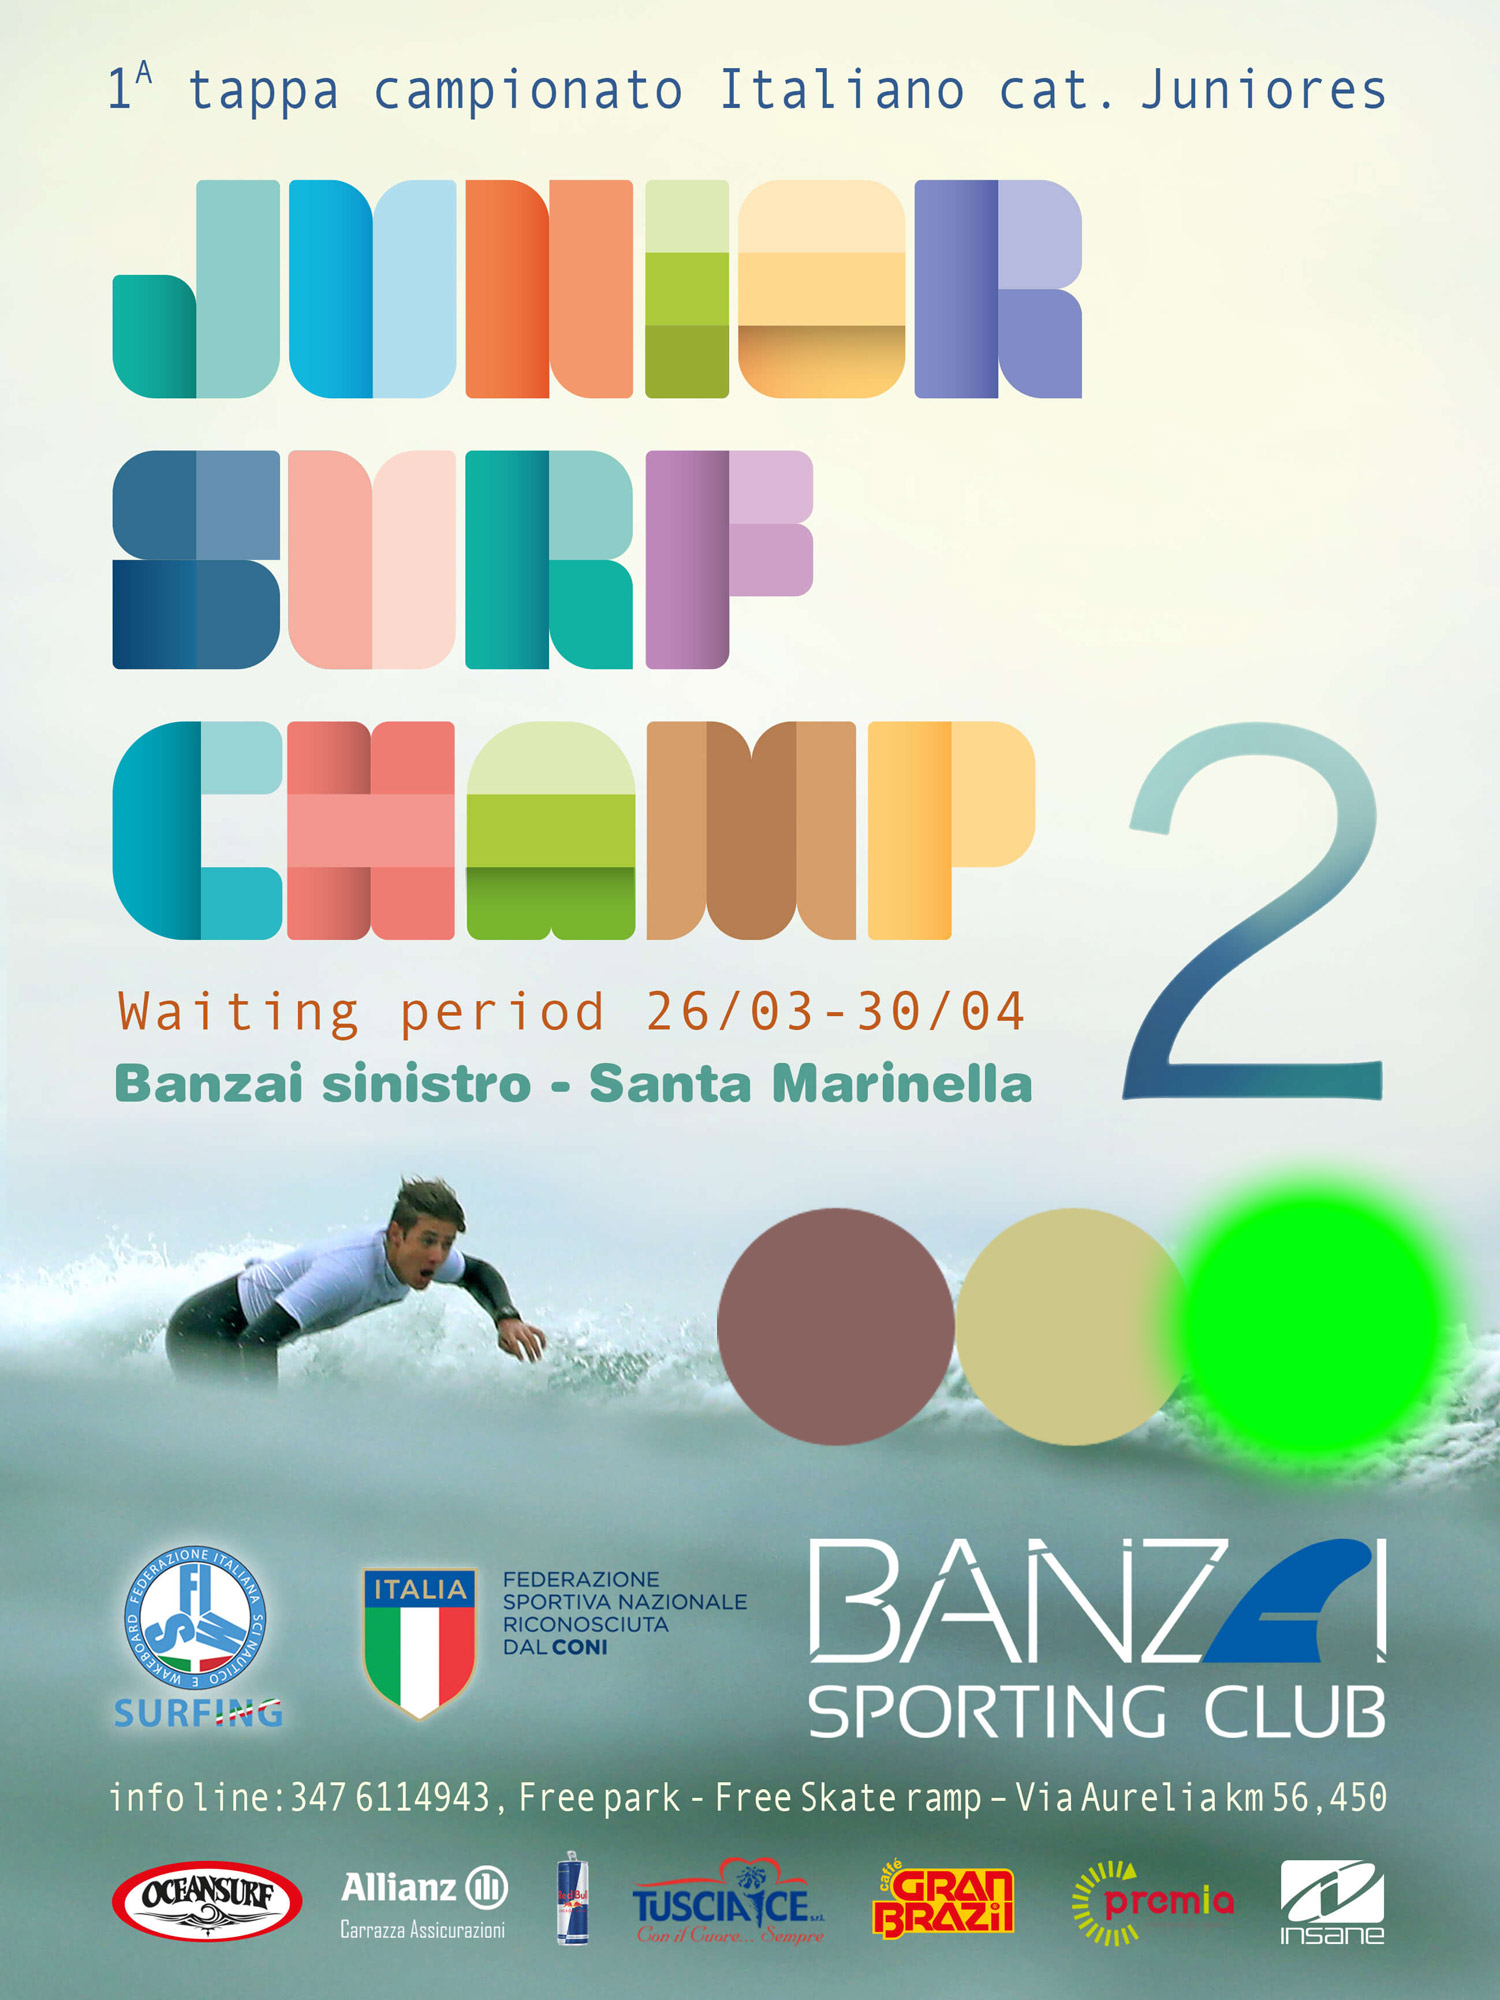 Locandina-Banzai-Sporting-Club-Junior-semaforo-verde